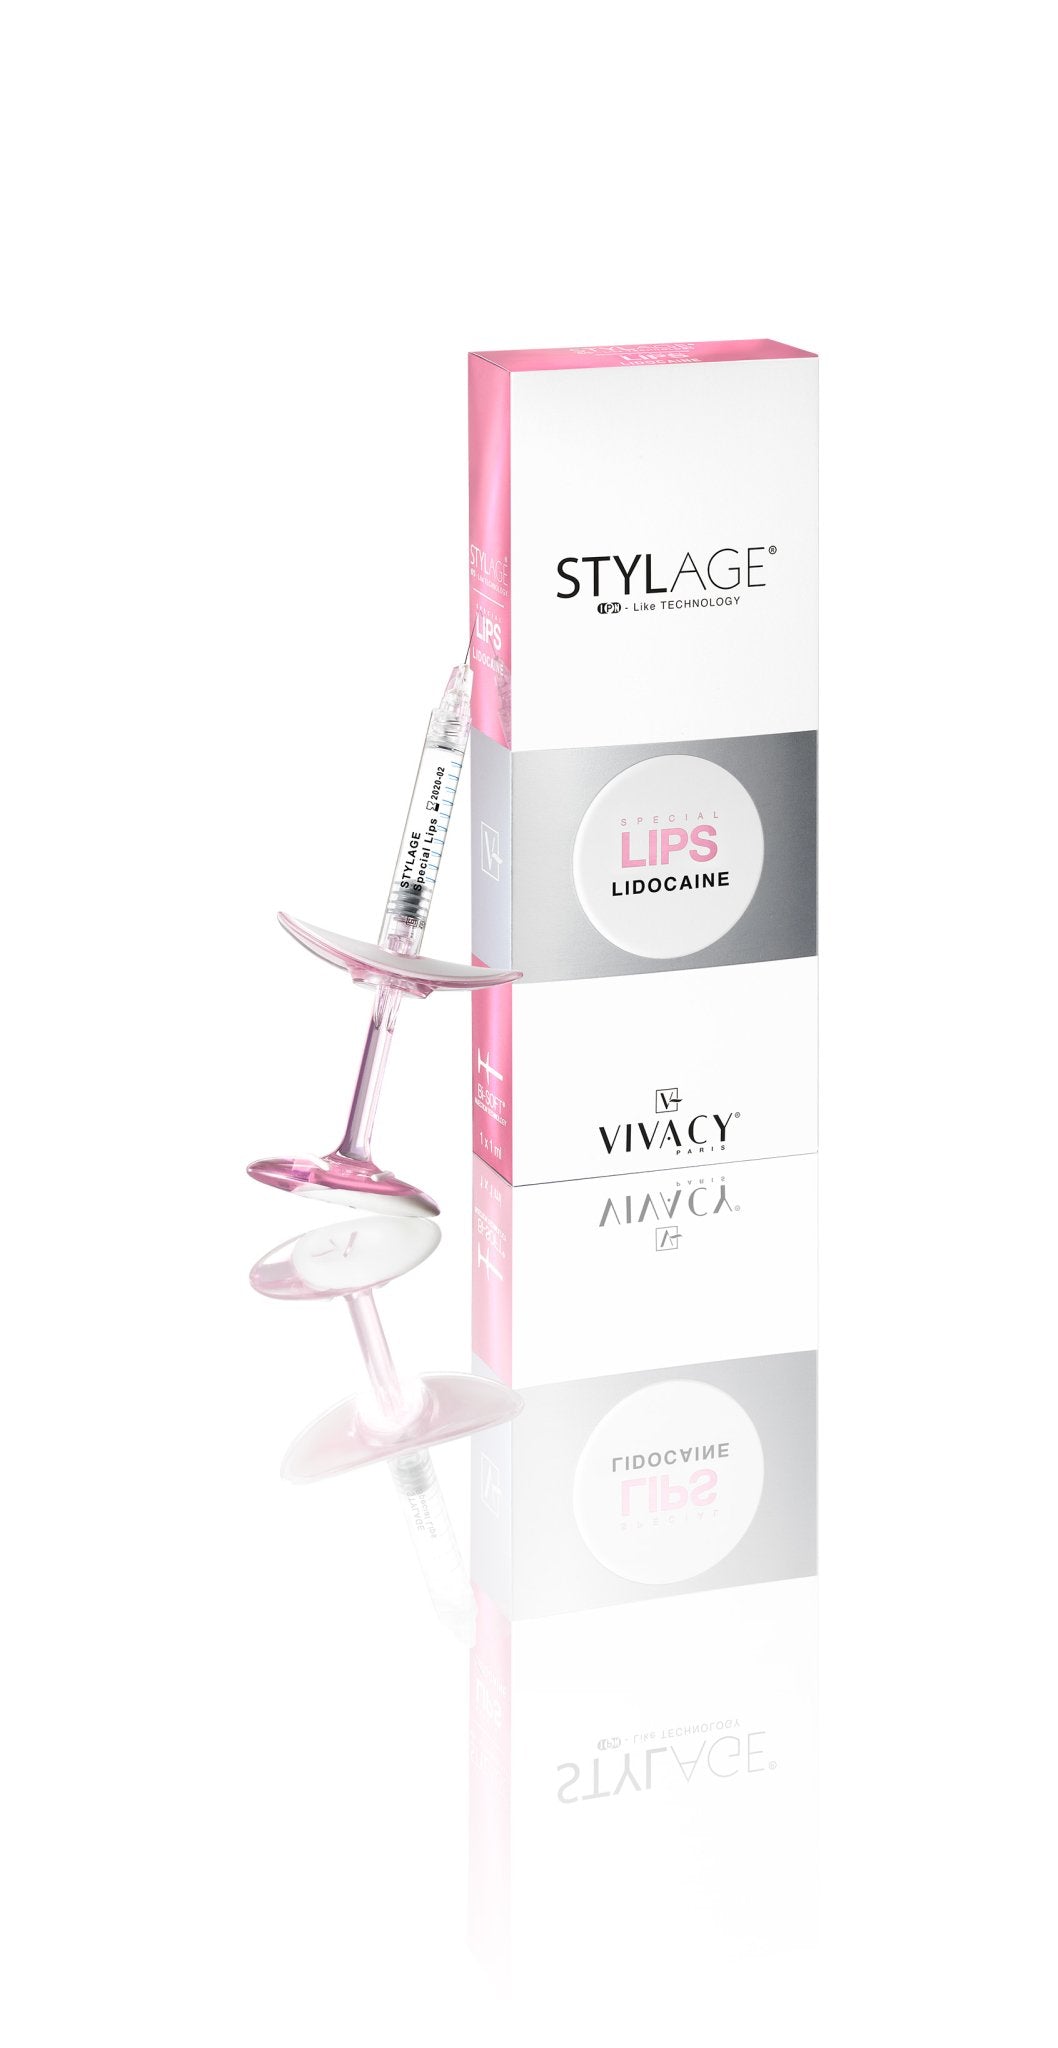 Vivacy - Stylage Lips Lidocaine Bi-Soft 1ml - DANYCARE